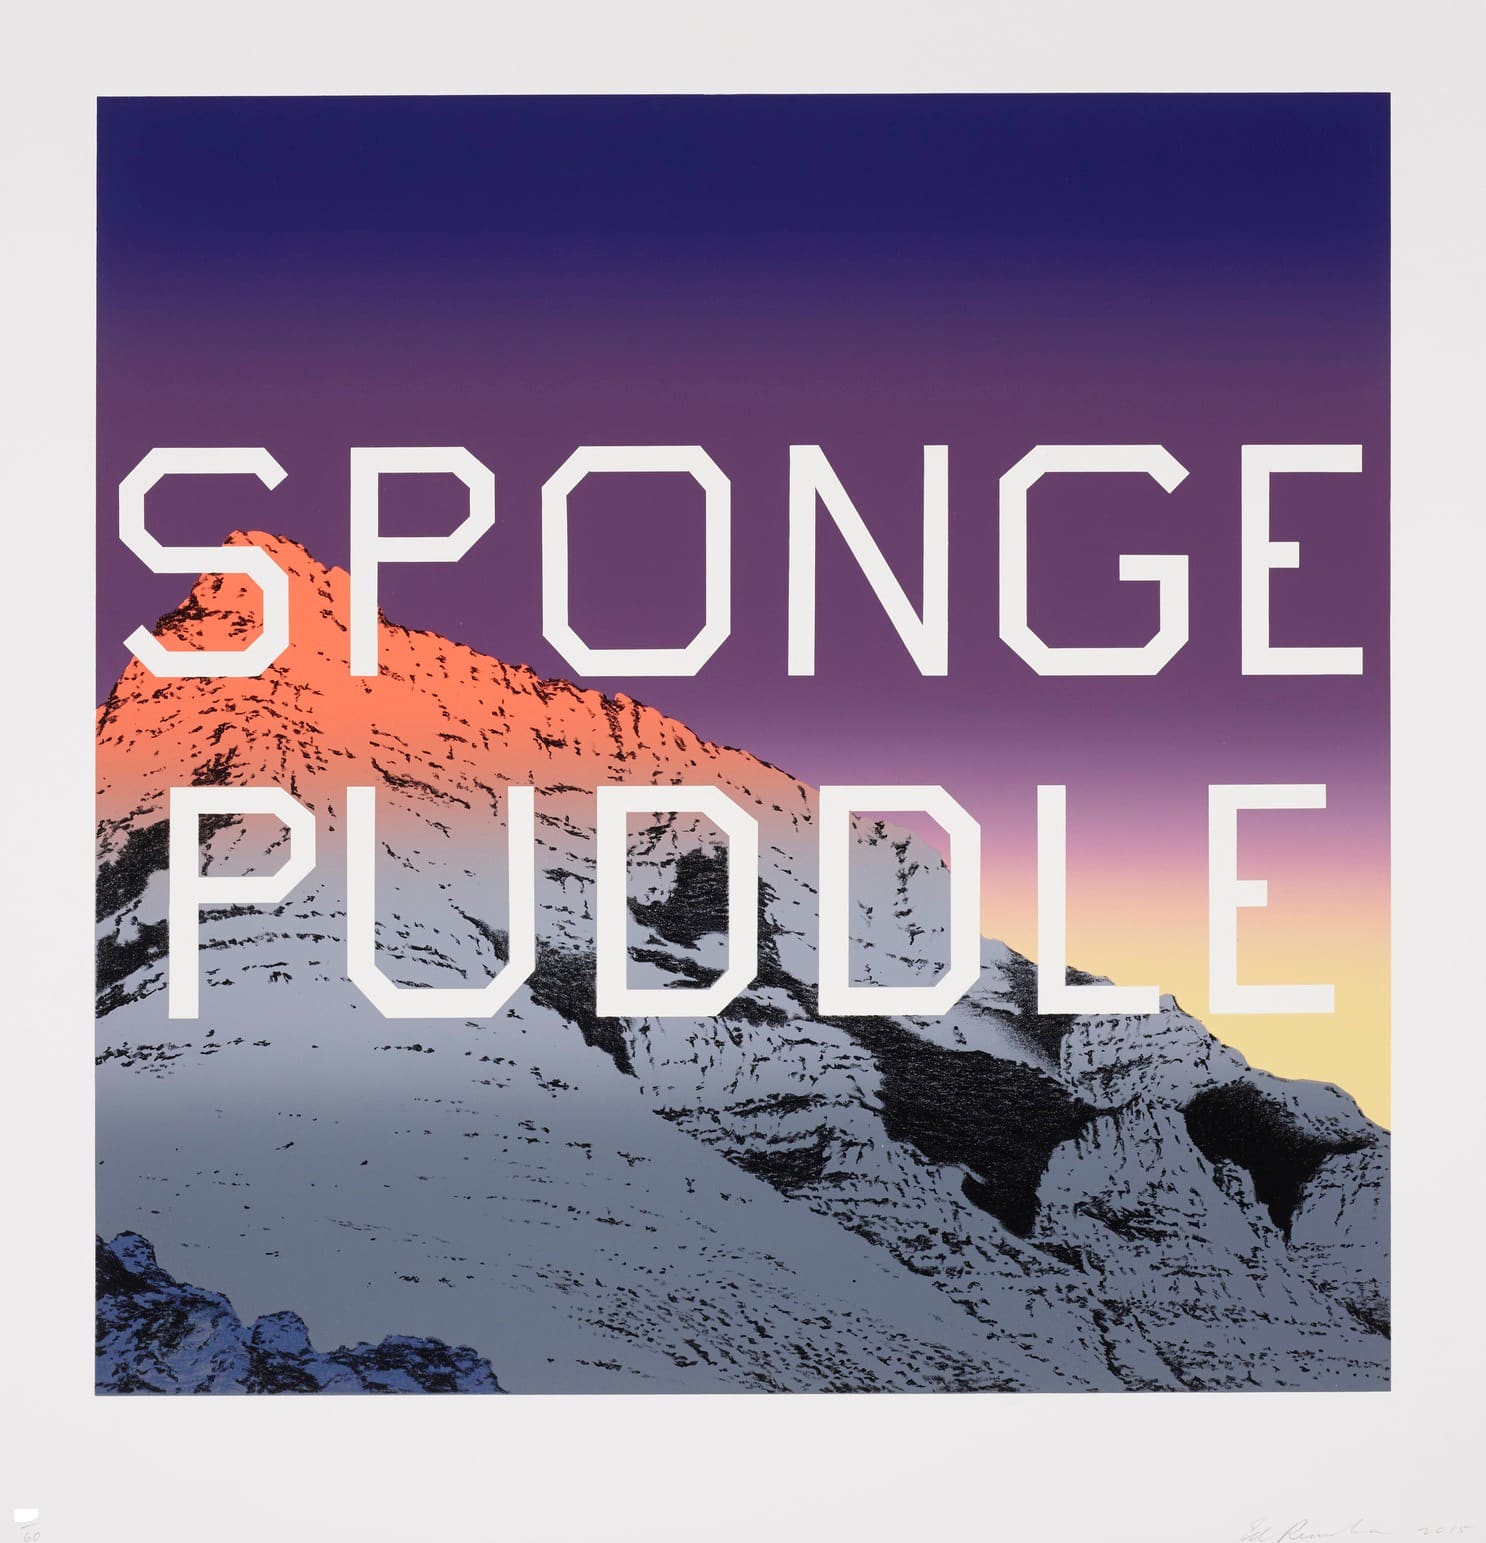 Ed Ruscha, Sponge Puddle, 2015